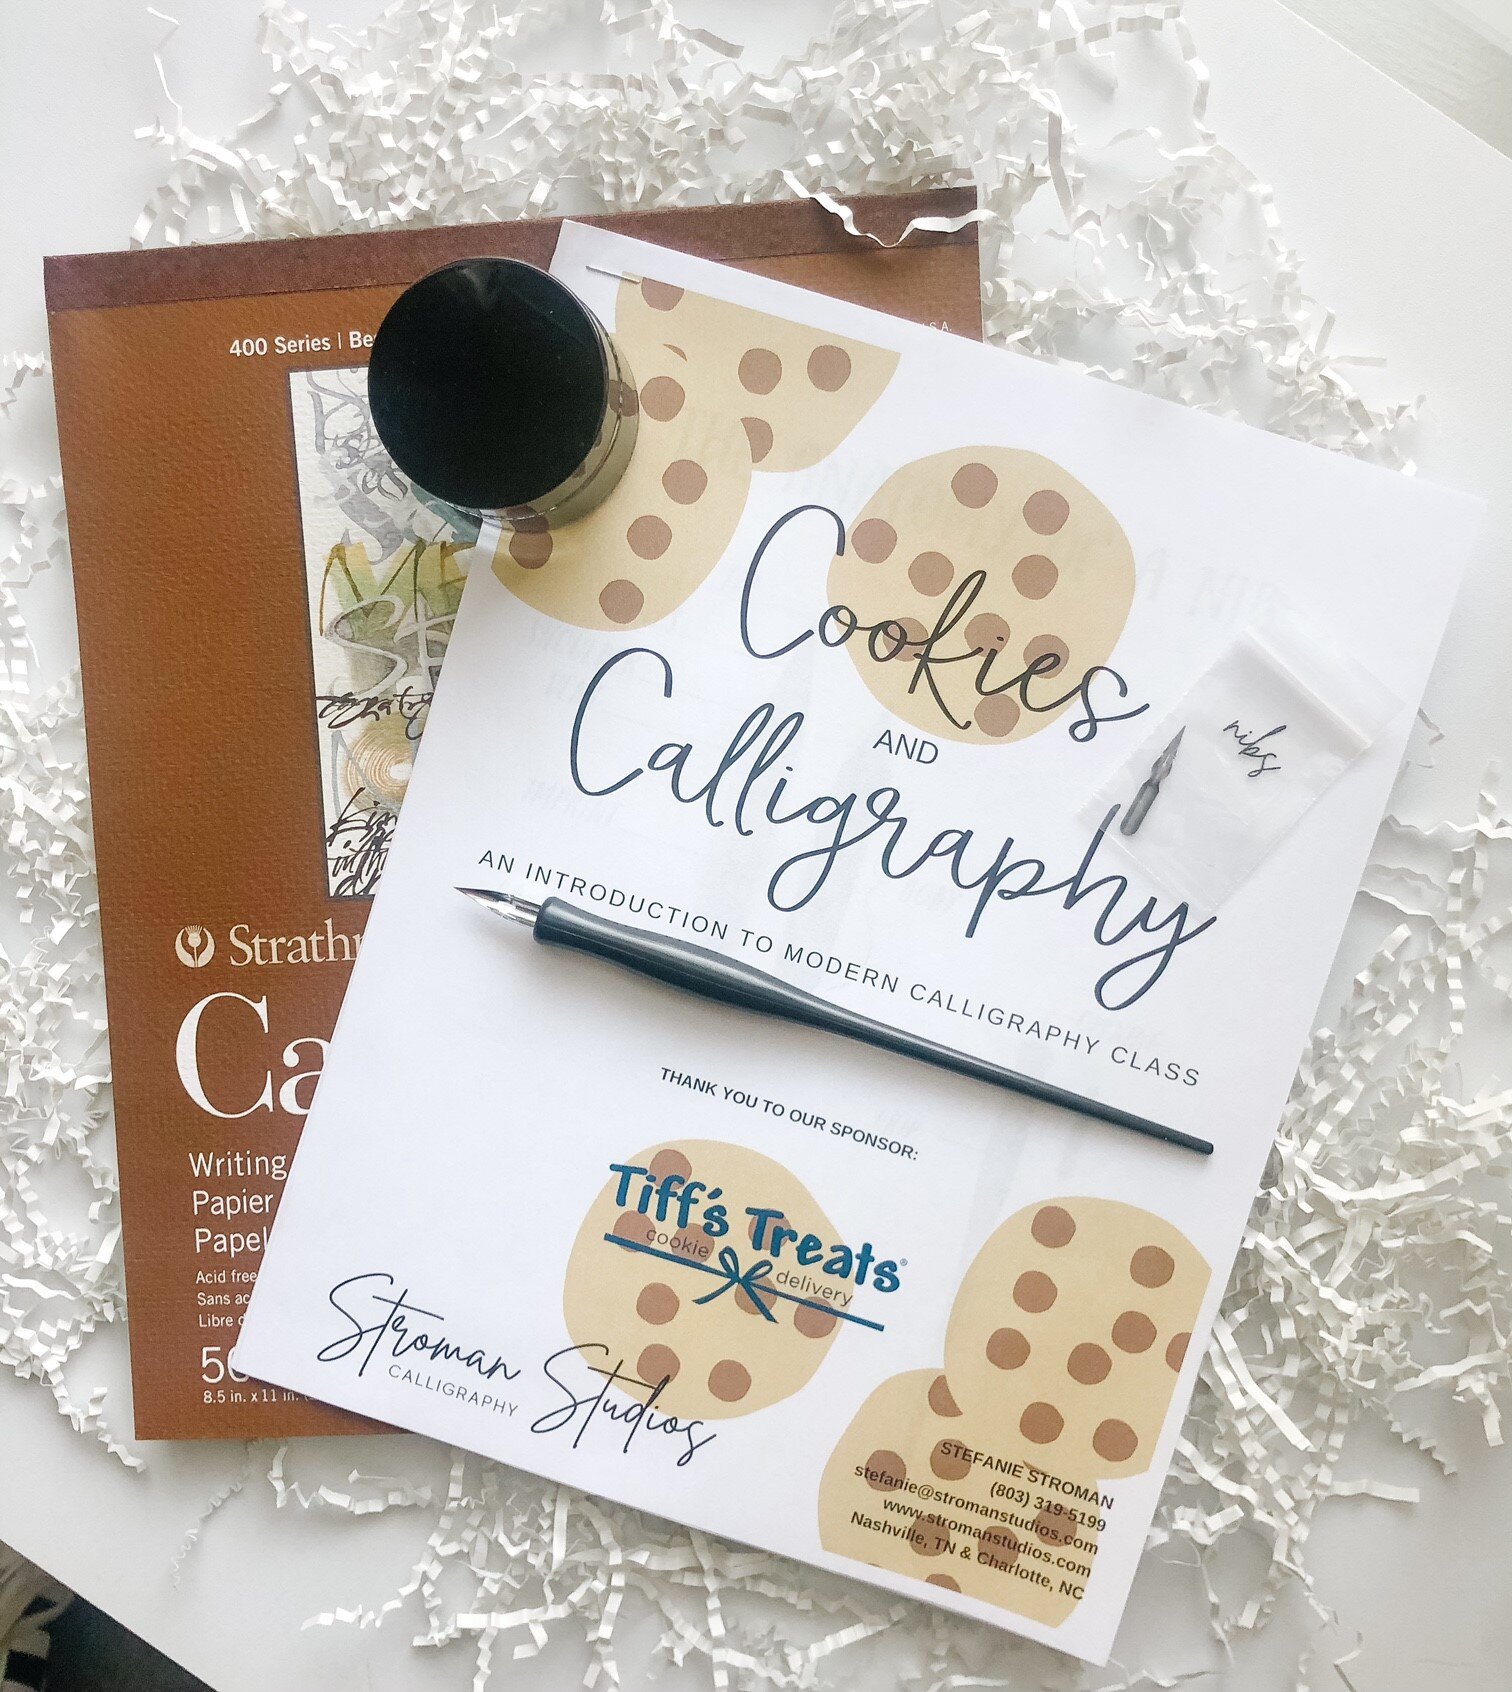 Cookies + Calligraphy Class Kit — Stroman Studios Calligraphy